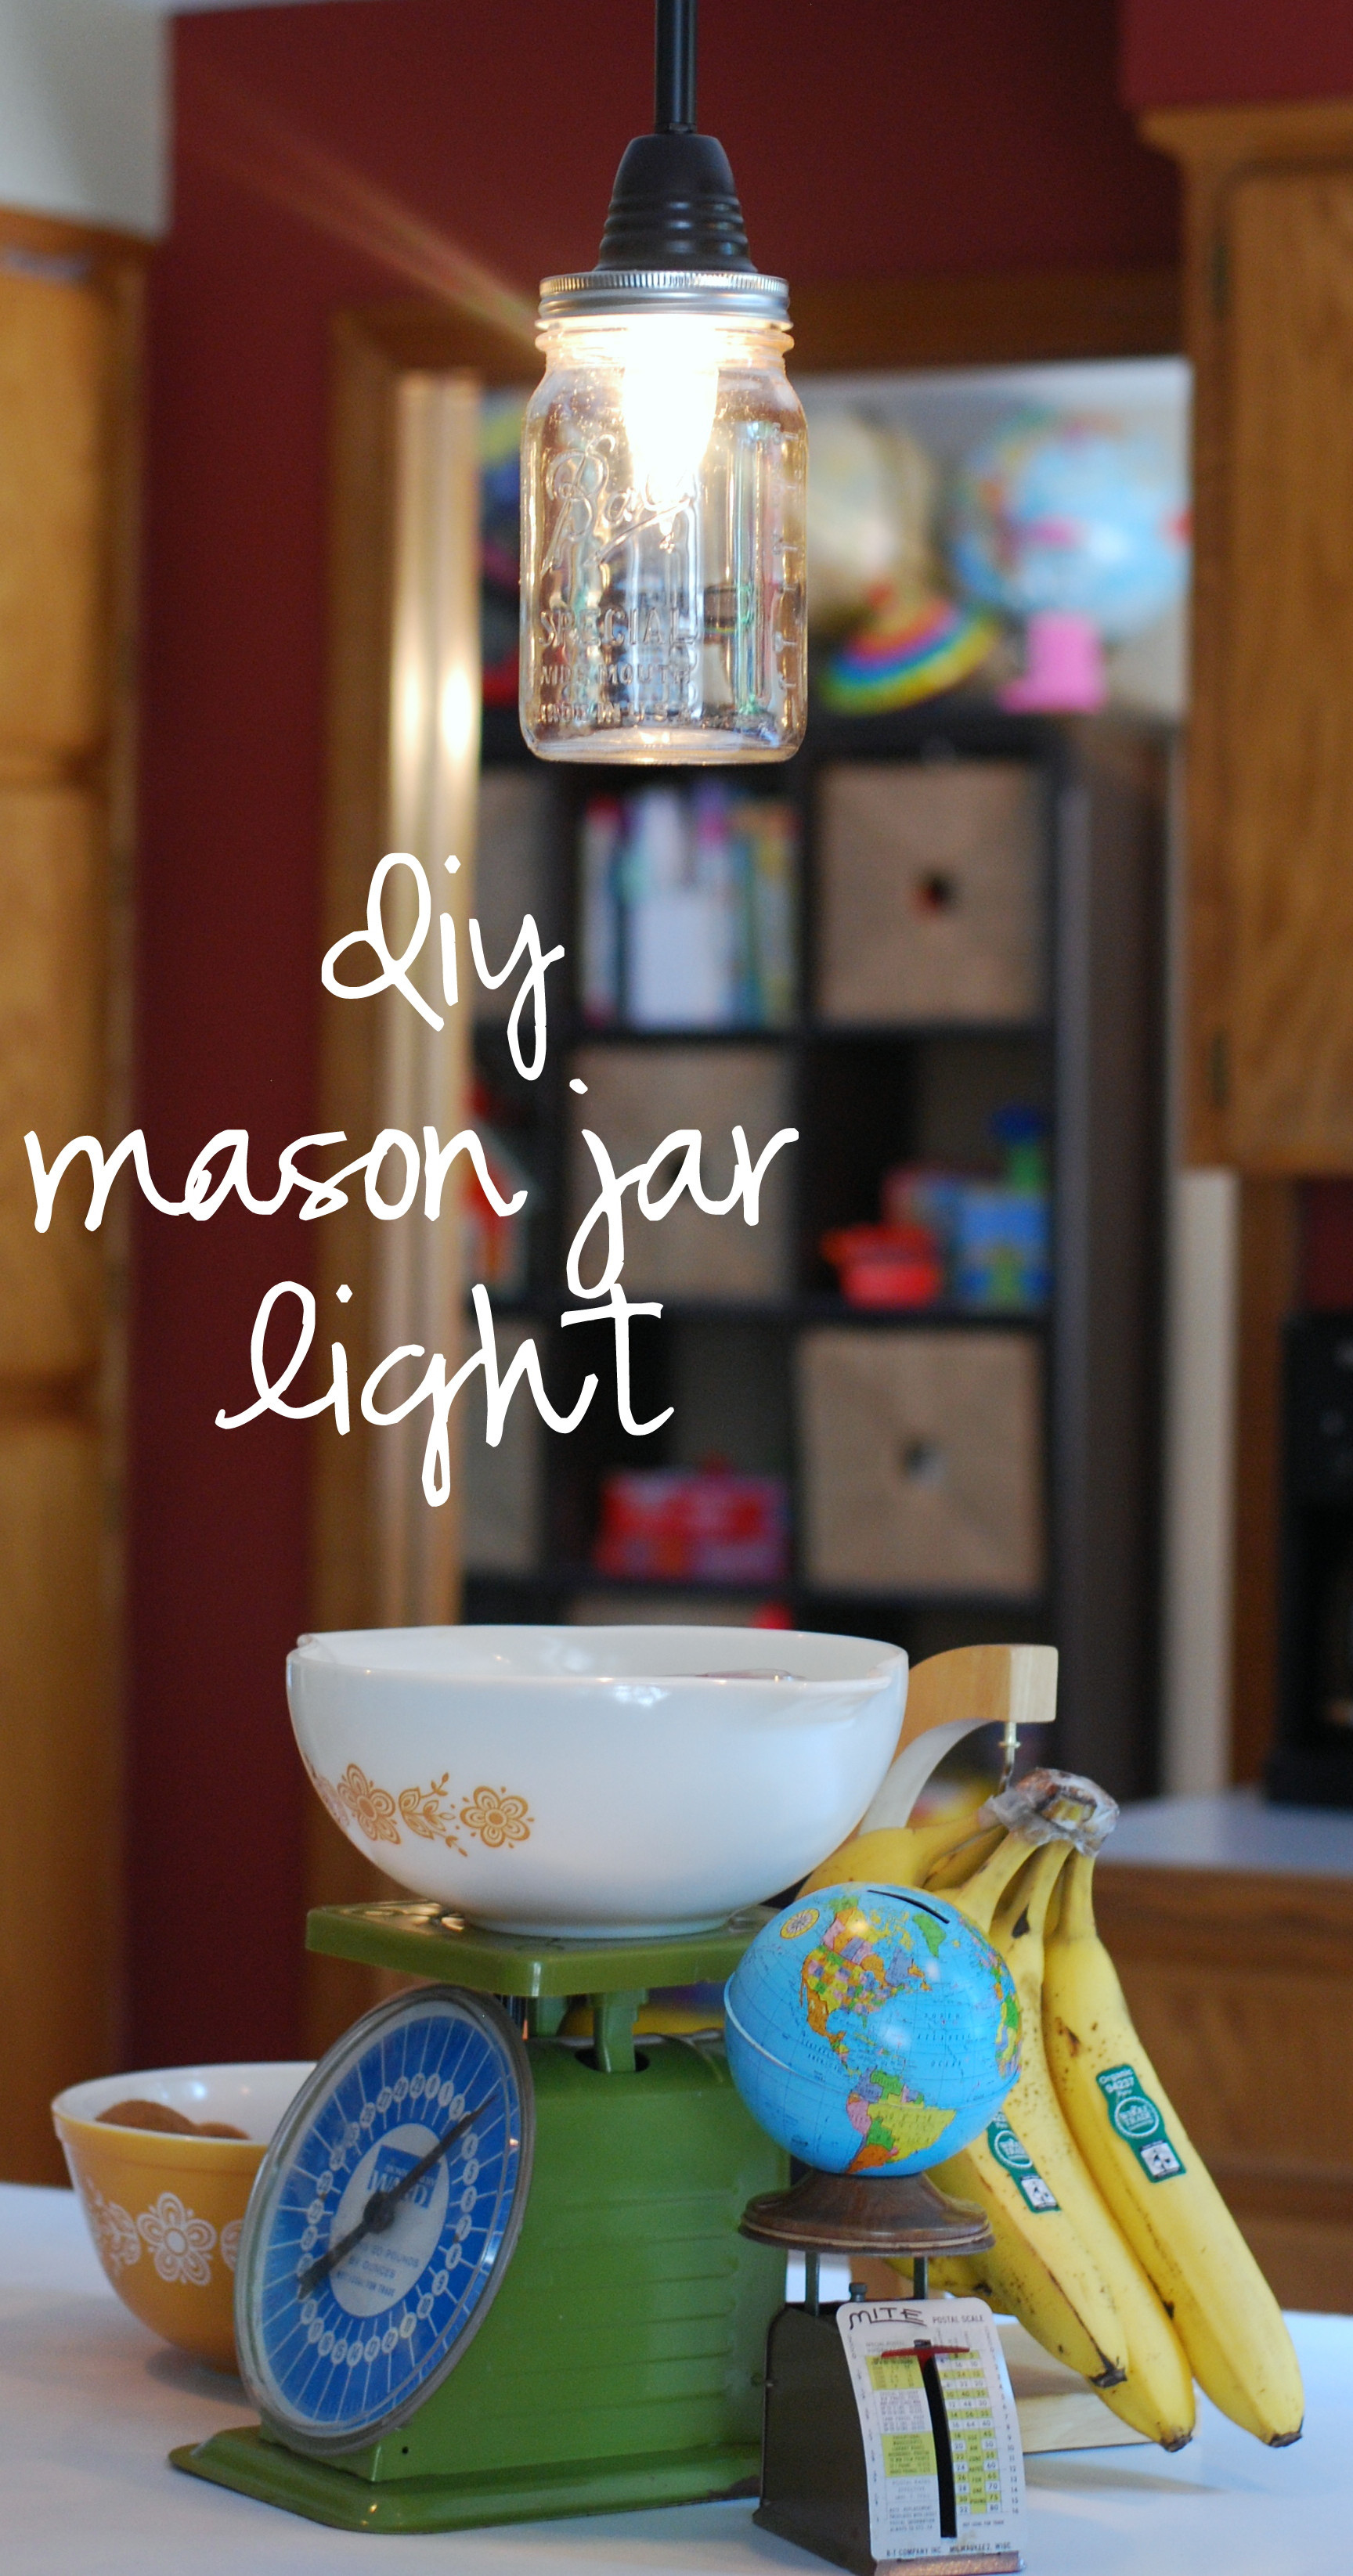 Best ideas about Mason Jar Pendant Light DIY
. Save or Pin diy mason jar pendant light Now.